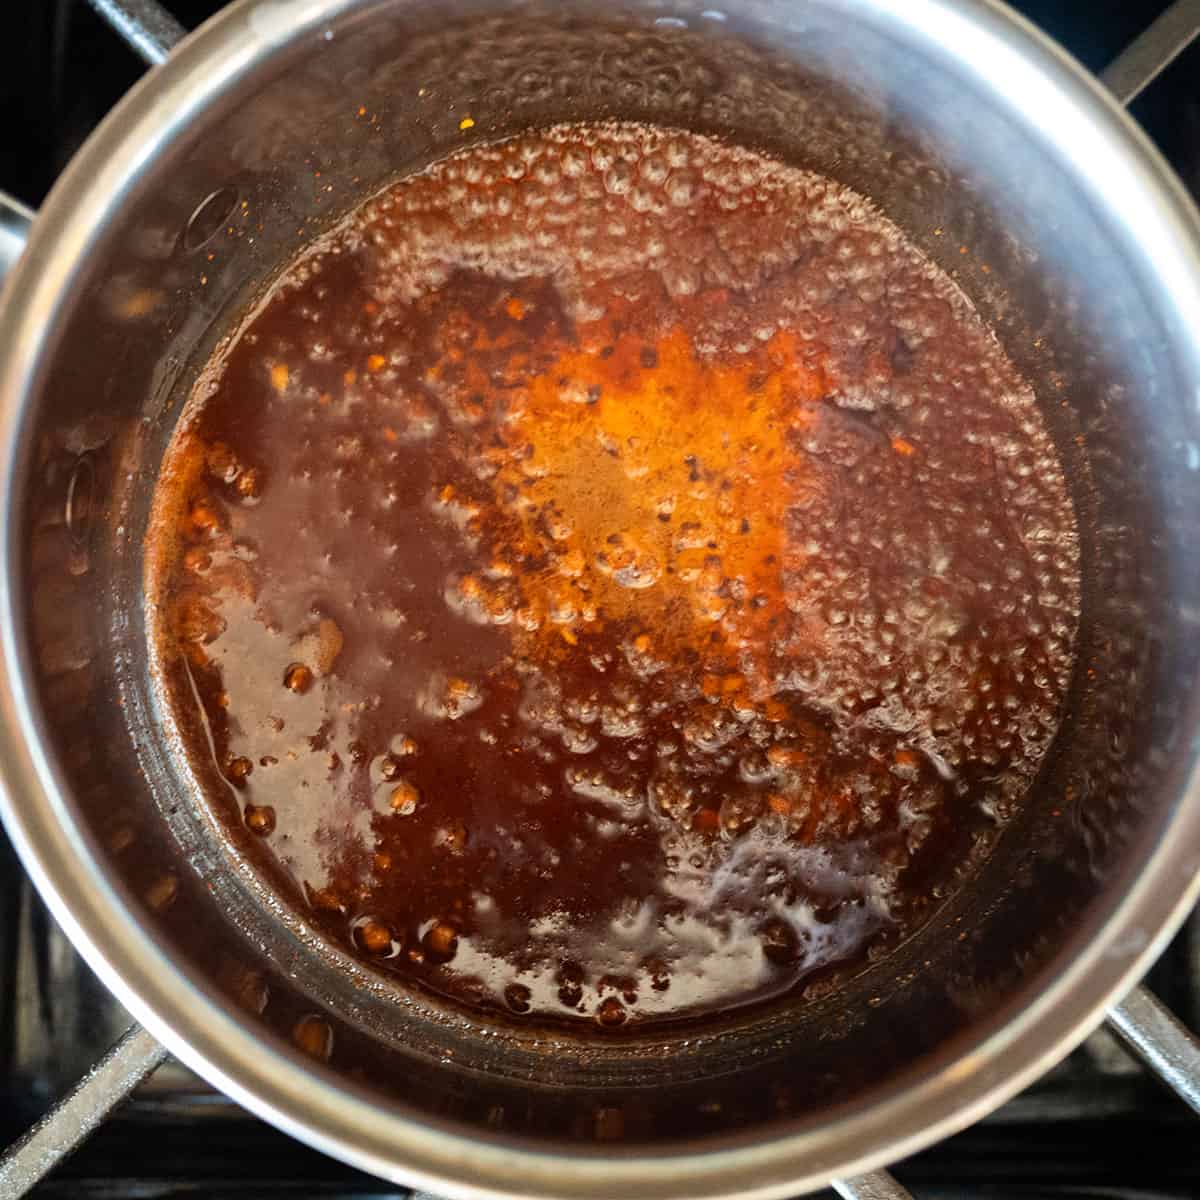 vinegar and pork rub simmering in pot.